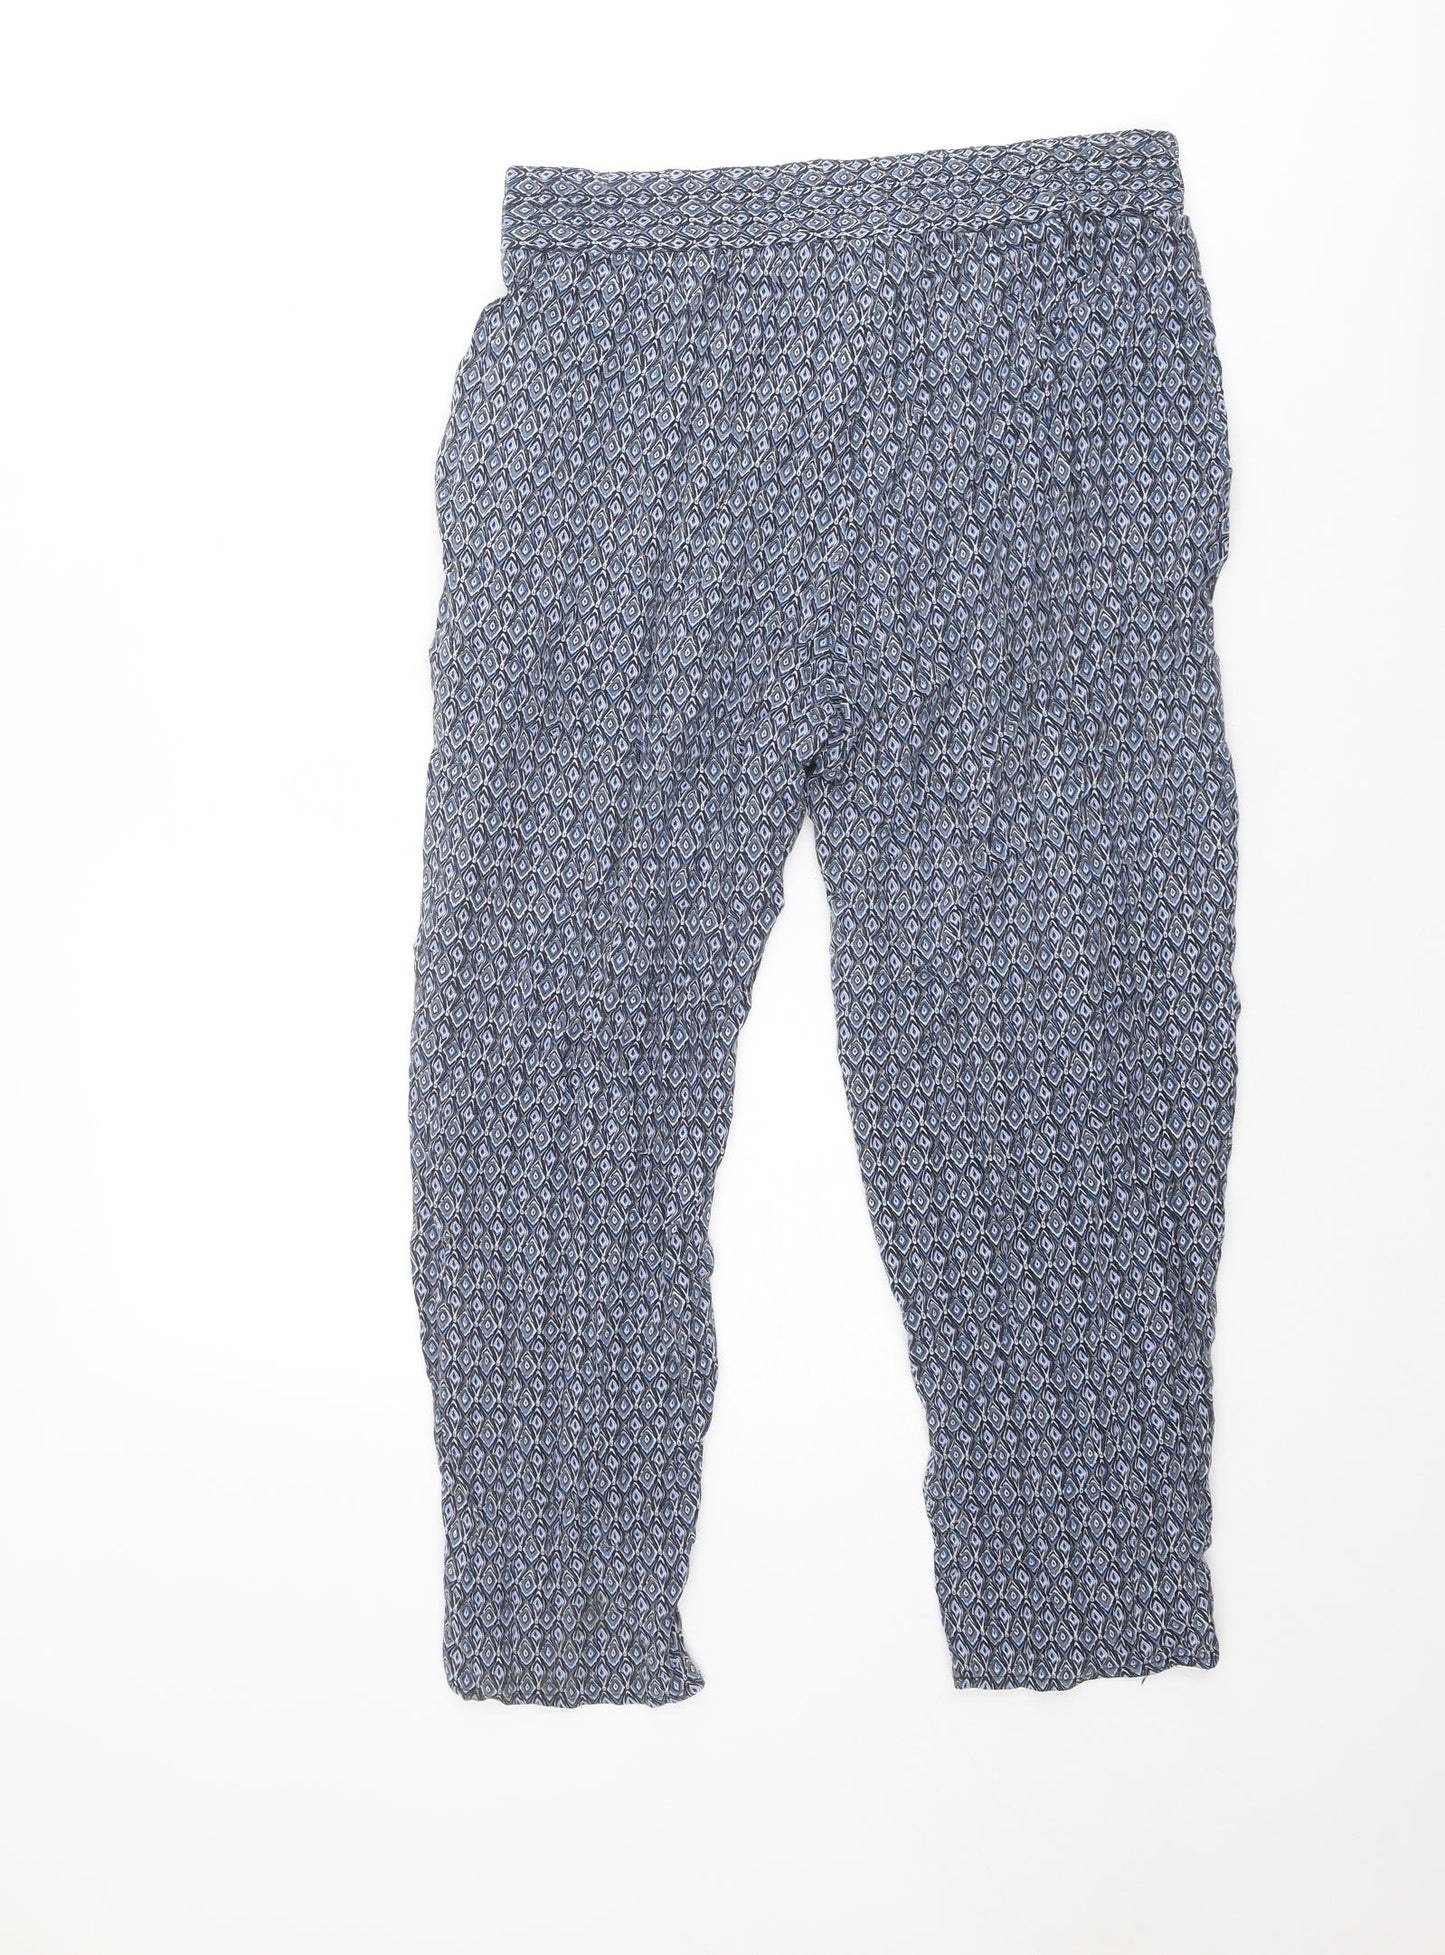 Indigo Womens Blue Geometric Viscose Trousers Size 12 L25 in Regular Drawstring